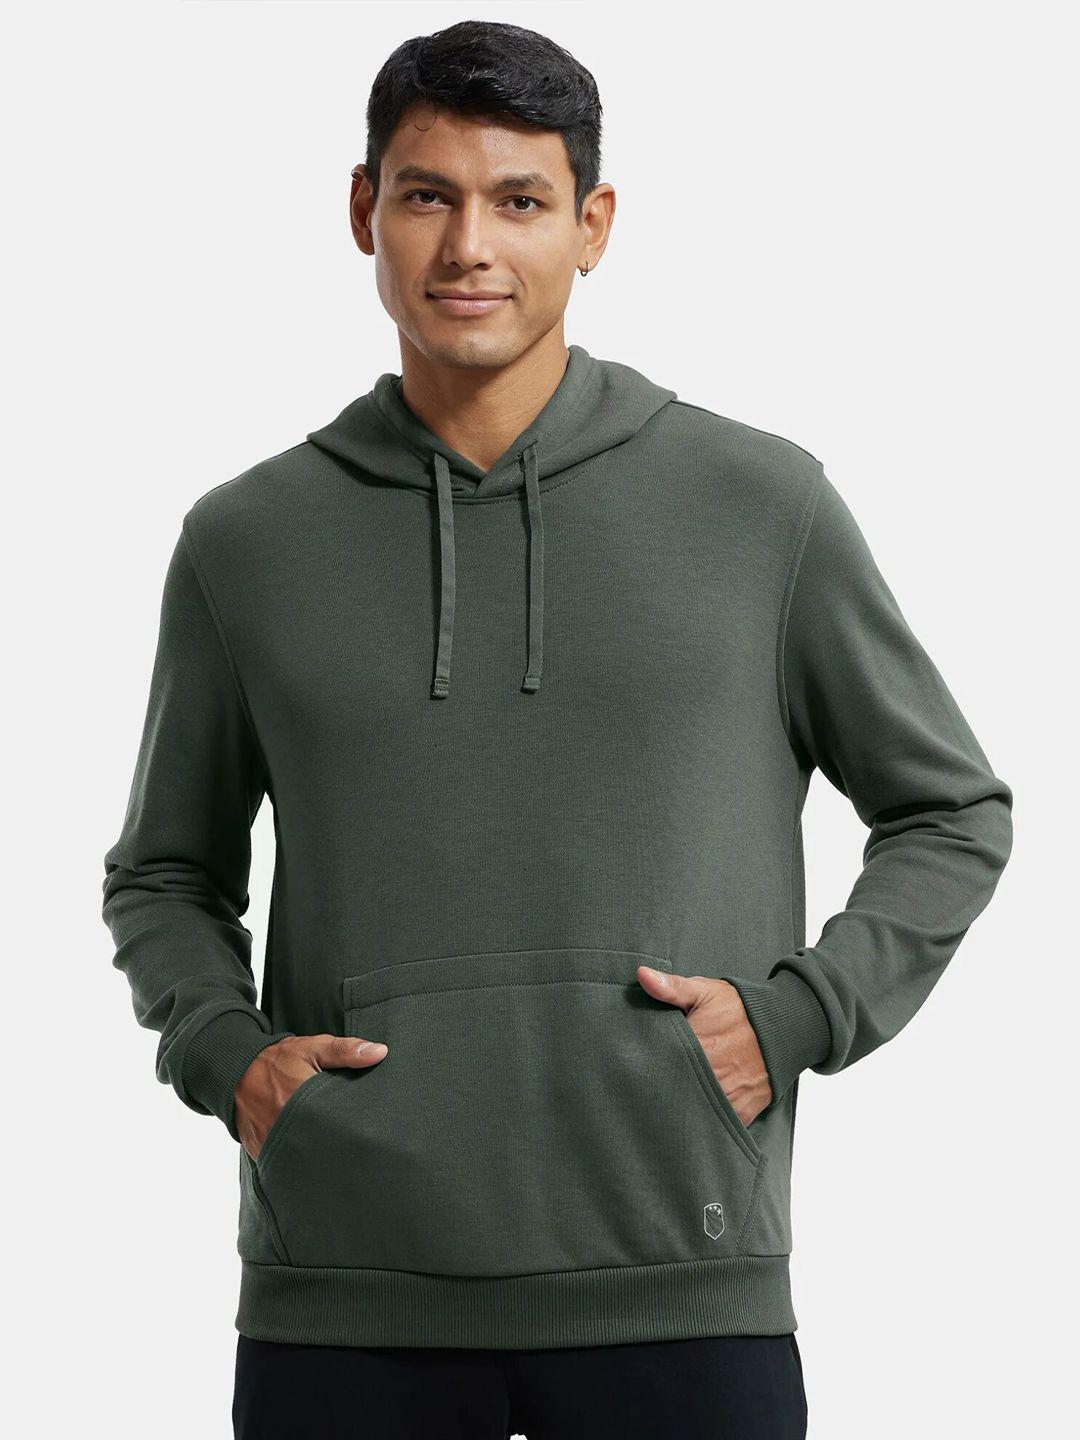 jockey-long-sleeves-pure-cotton-hooded-pullover-sweatshirt